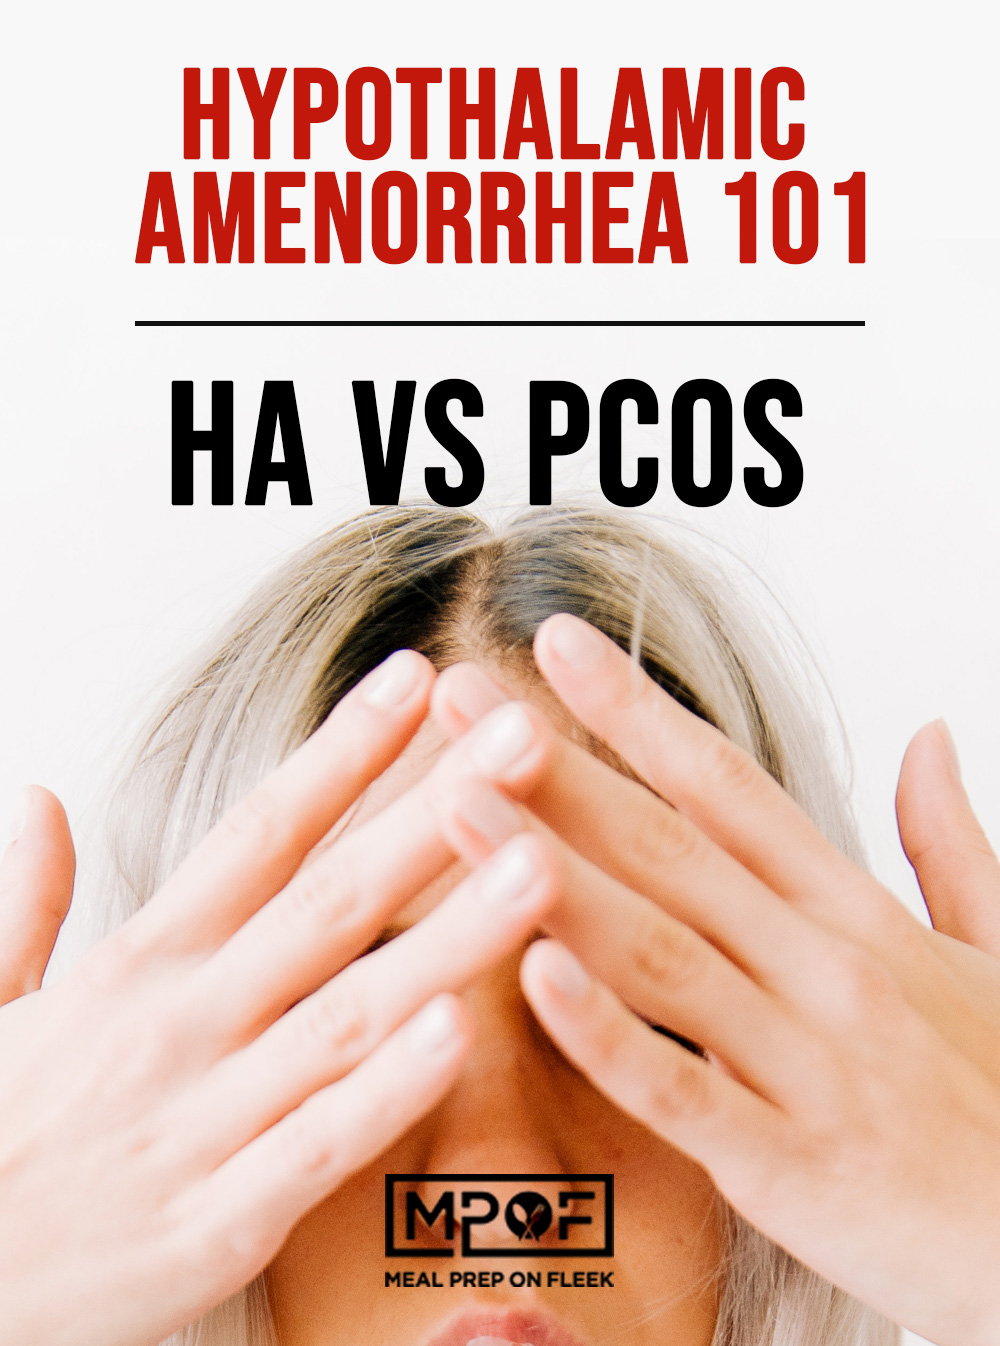 Hypothalamic Amenorrhea